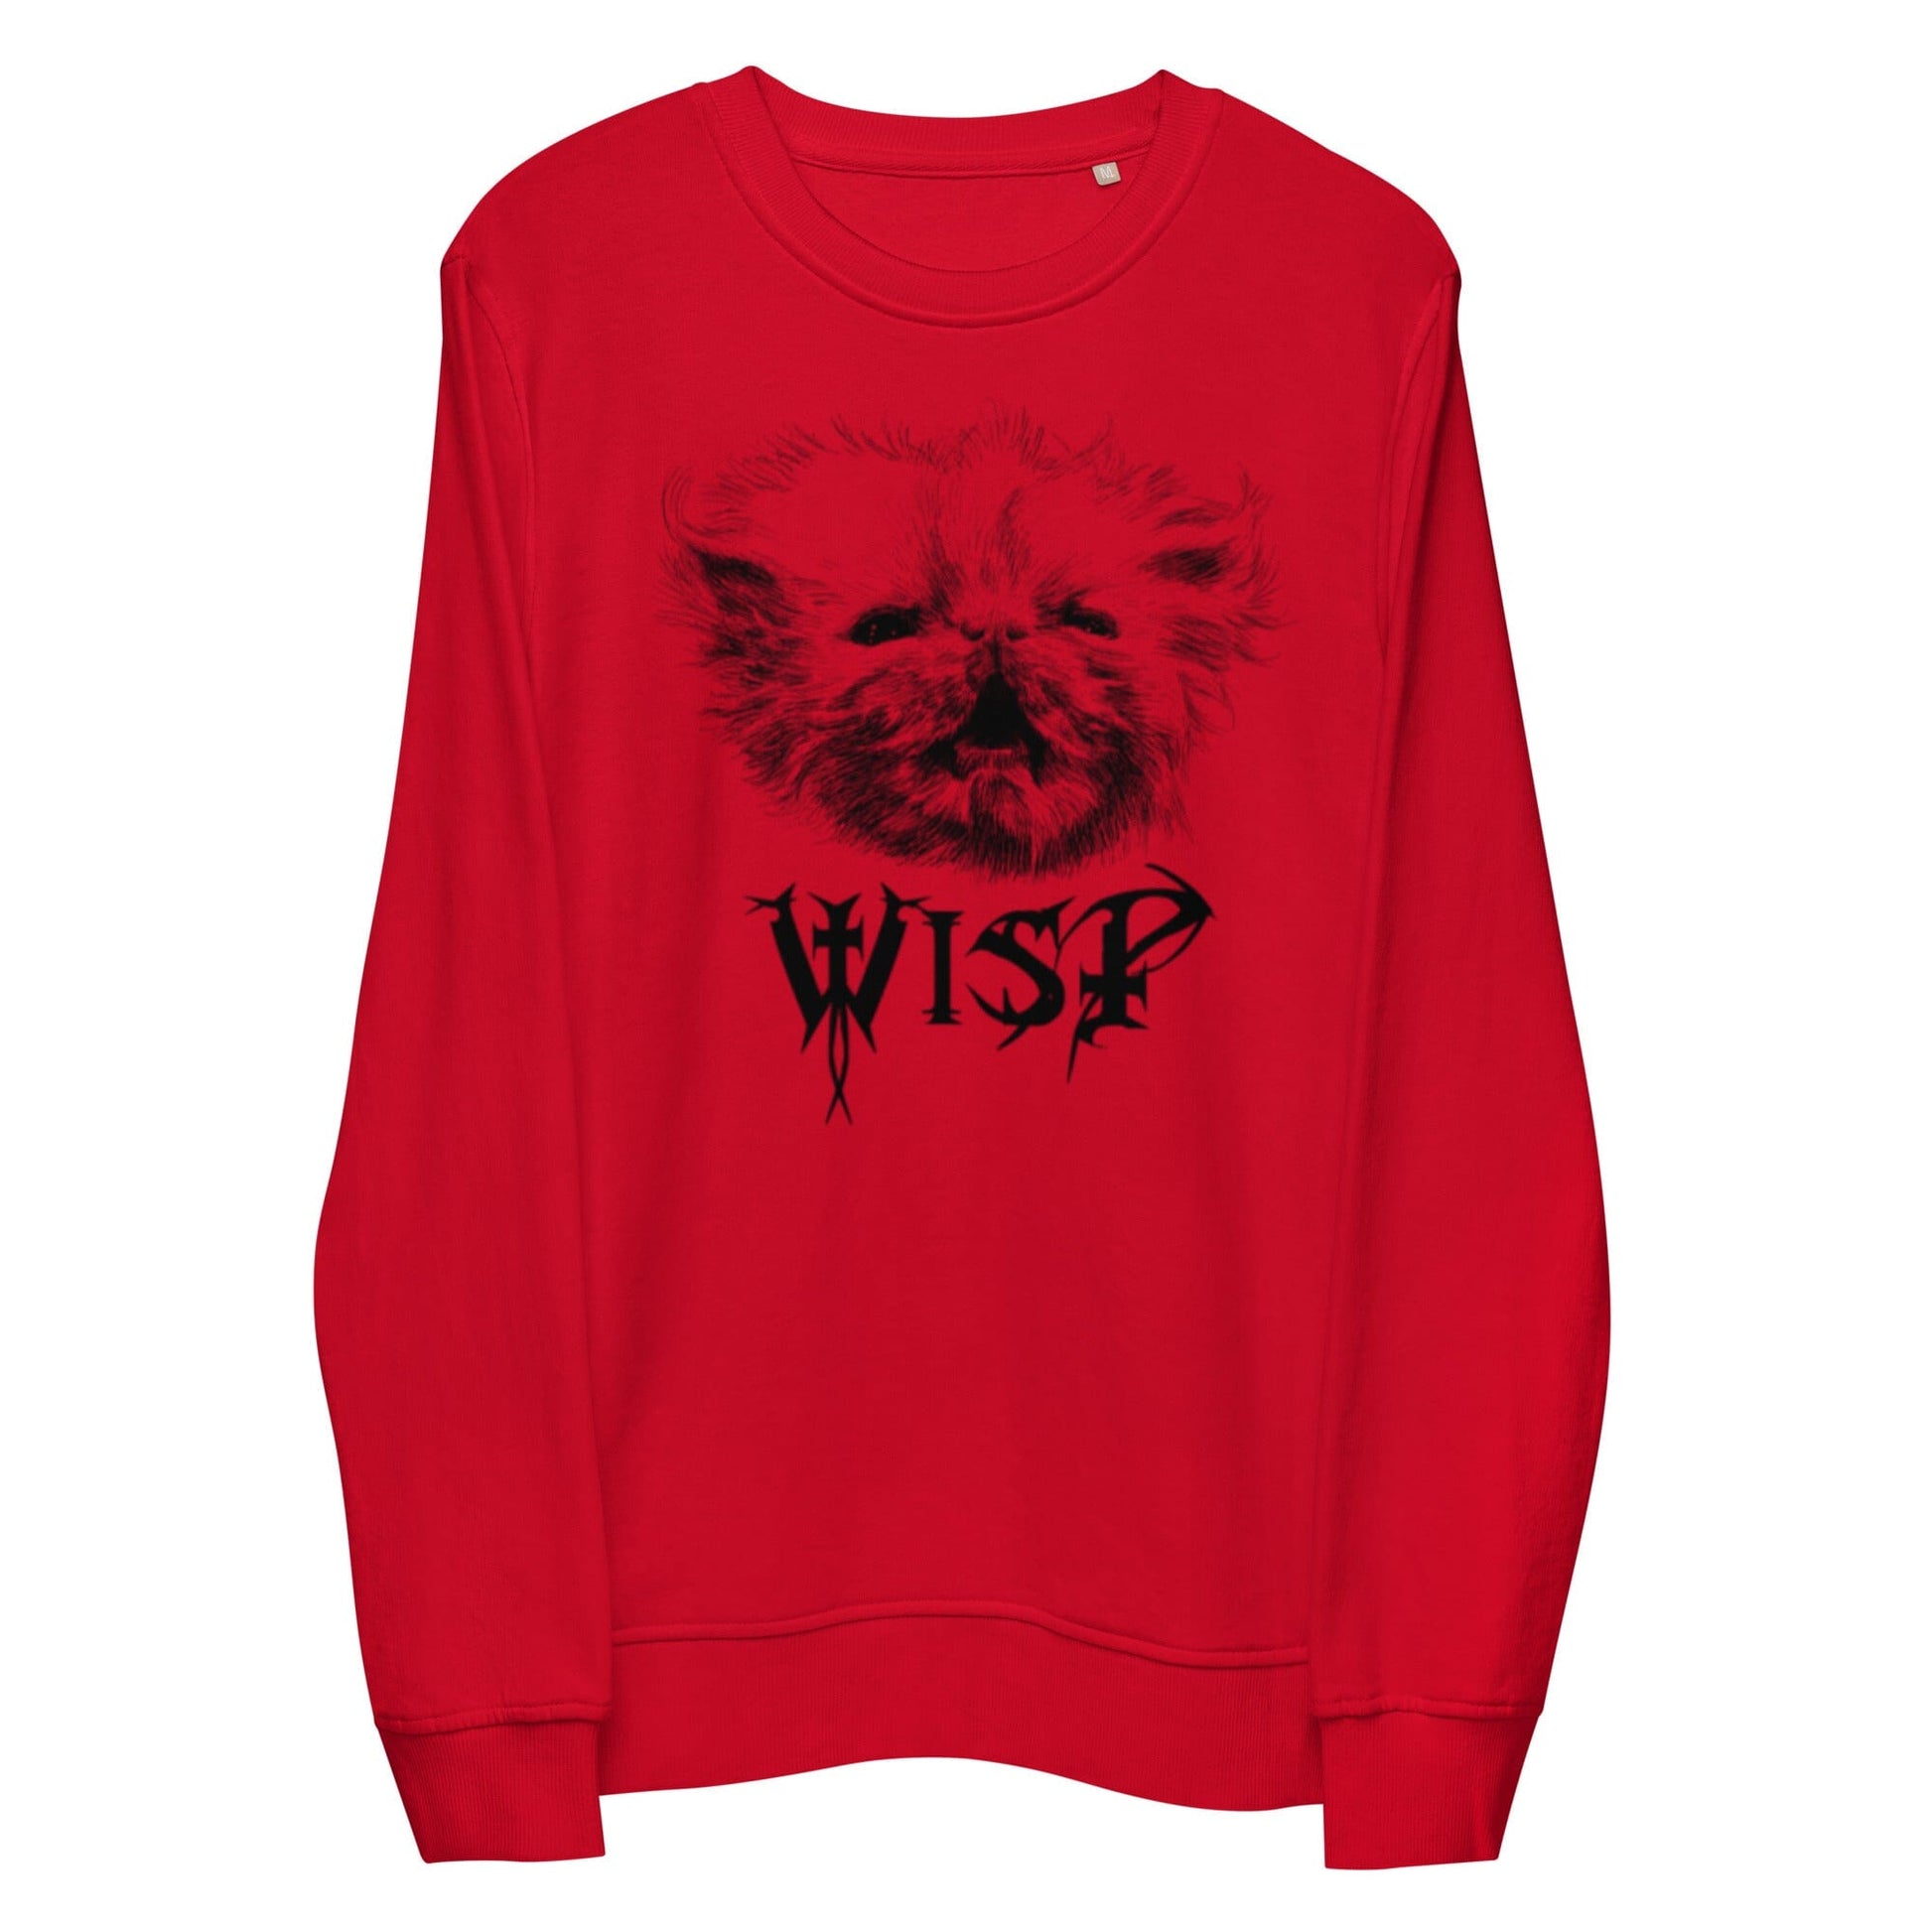 Metal Wisp Sweatshirt [Unfoiled] (All net proceeds go to Rags to Riches Animal Rescue) JoyousJoyfulJoyness Red S 